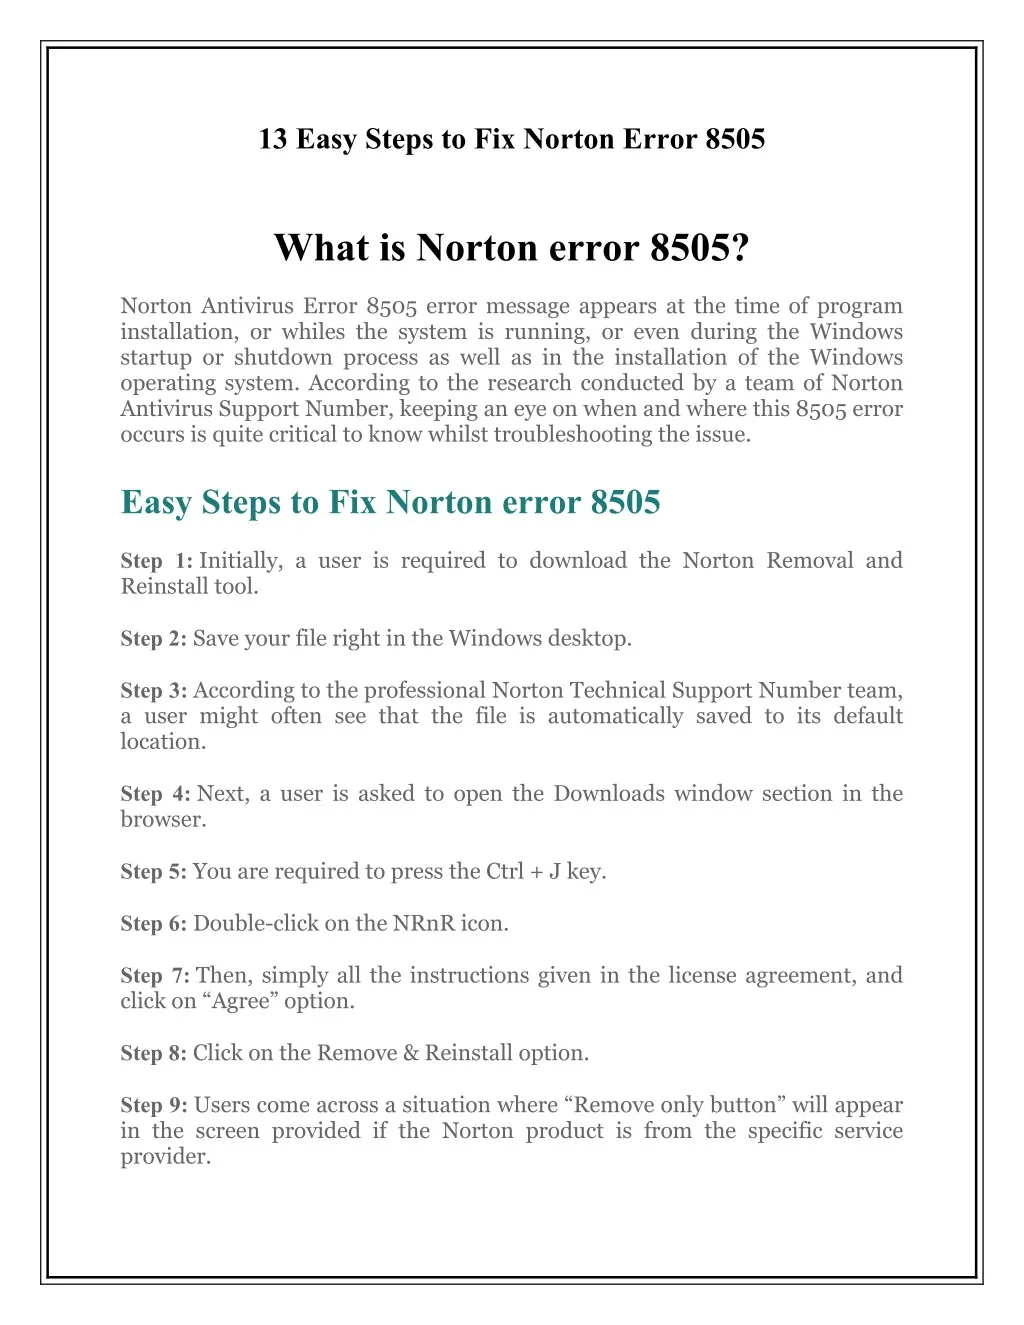 13 easy steps to fix norton error 8505